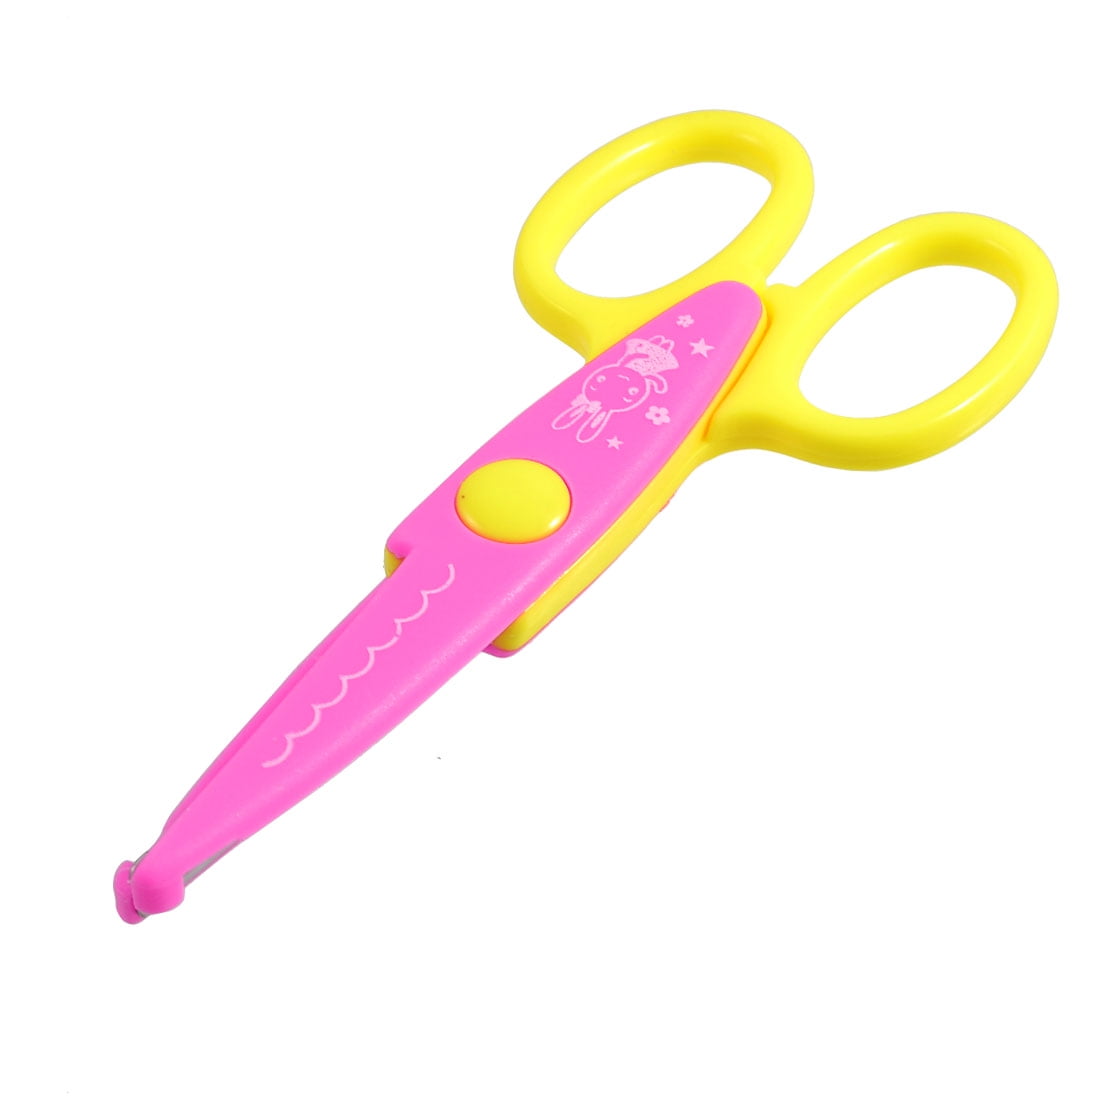 Ribbon Scissors